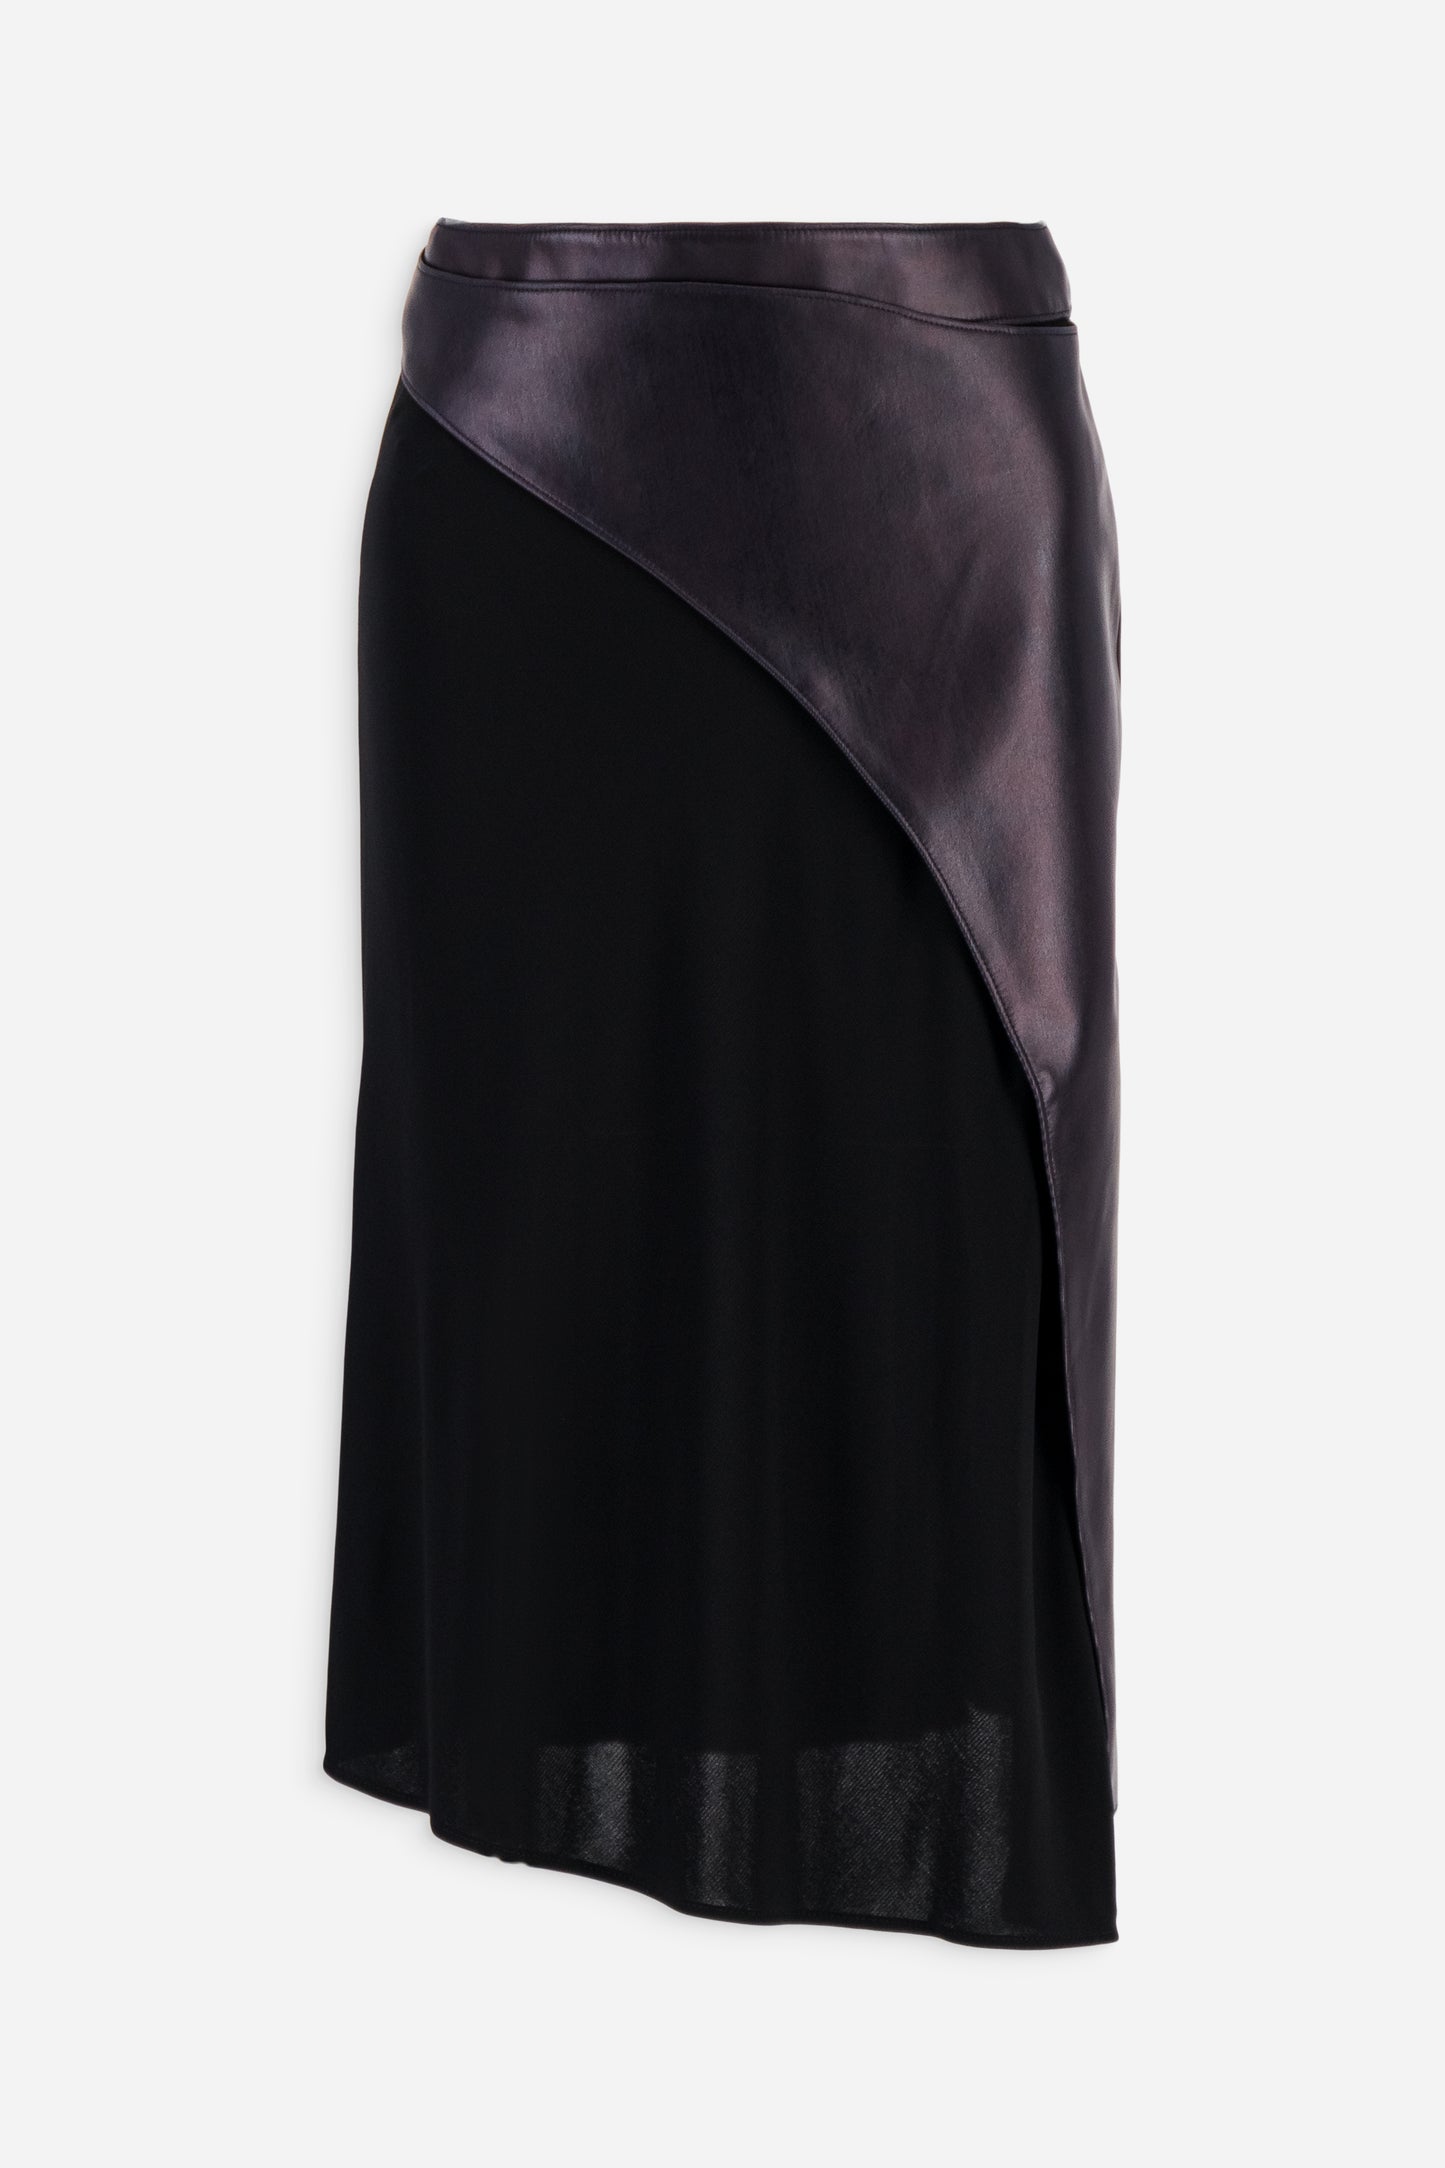 Bi-material buckle detail skirt - Exclusive